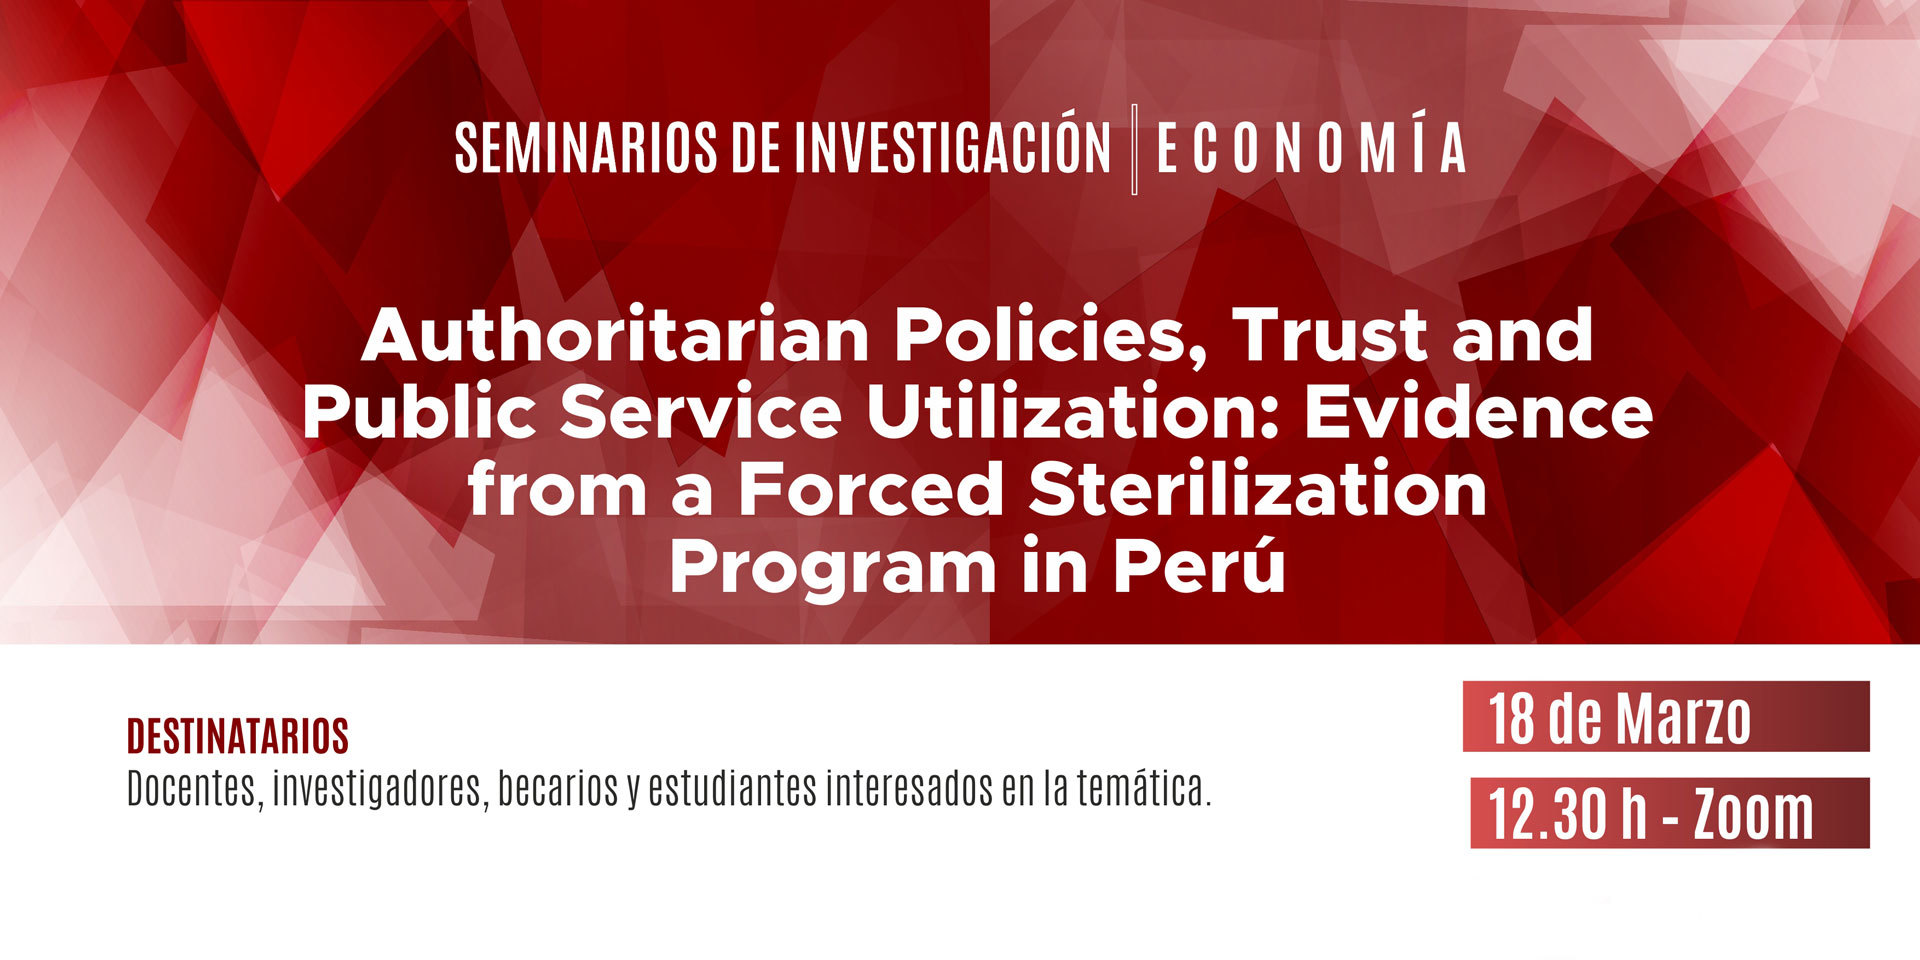 Seminario de Investigación "Authoritarian Policies, Trust and Public Service Utilization: Evidence from a Forced Sterilization Program in Perú"